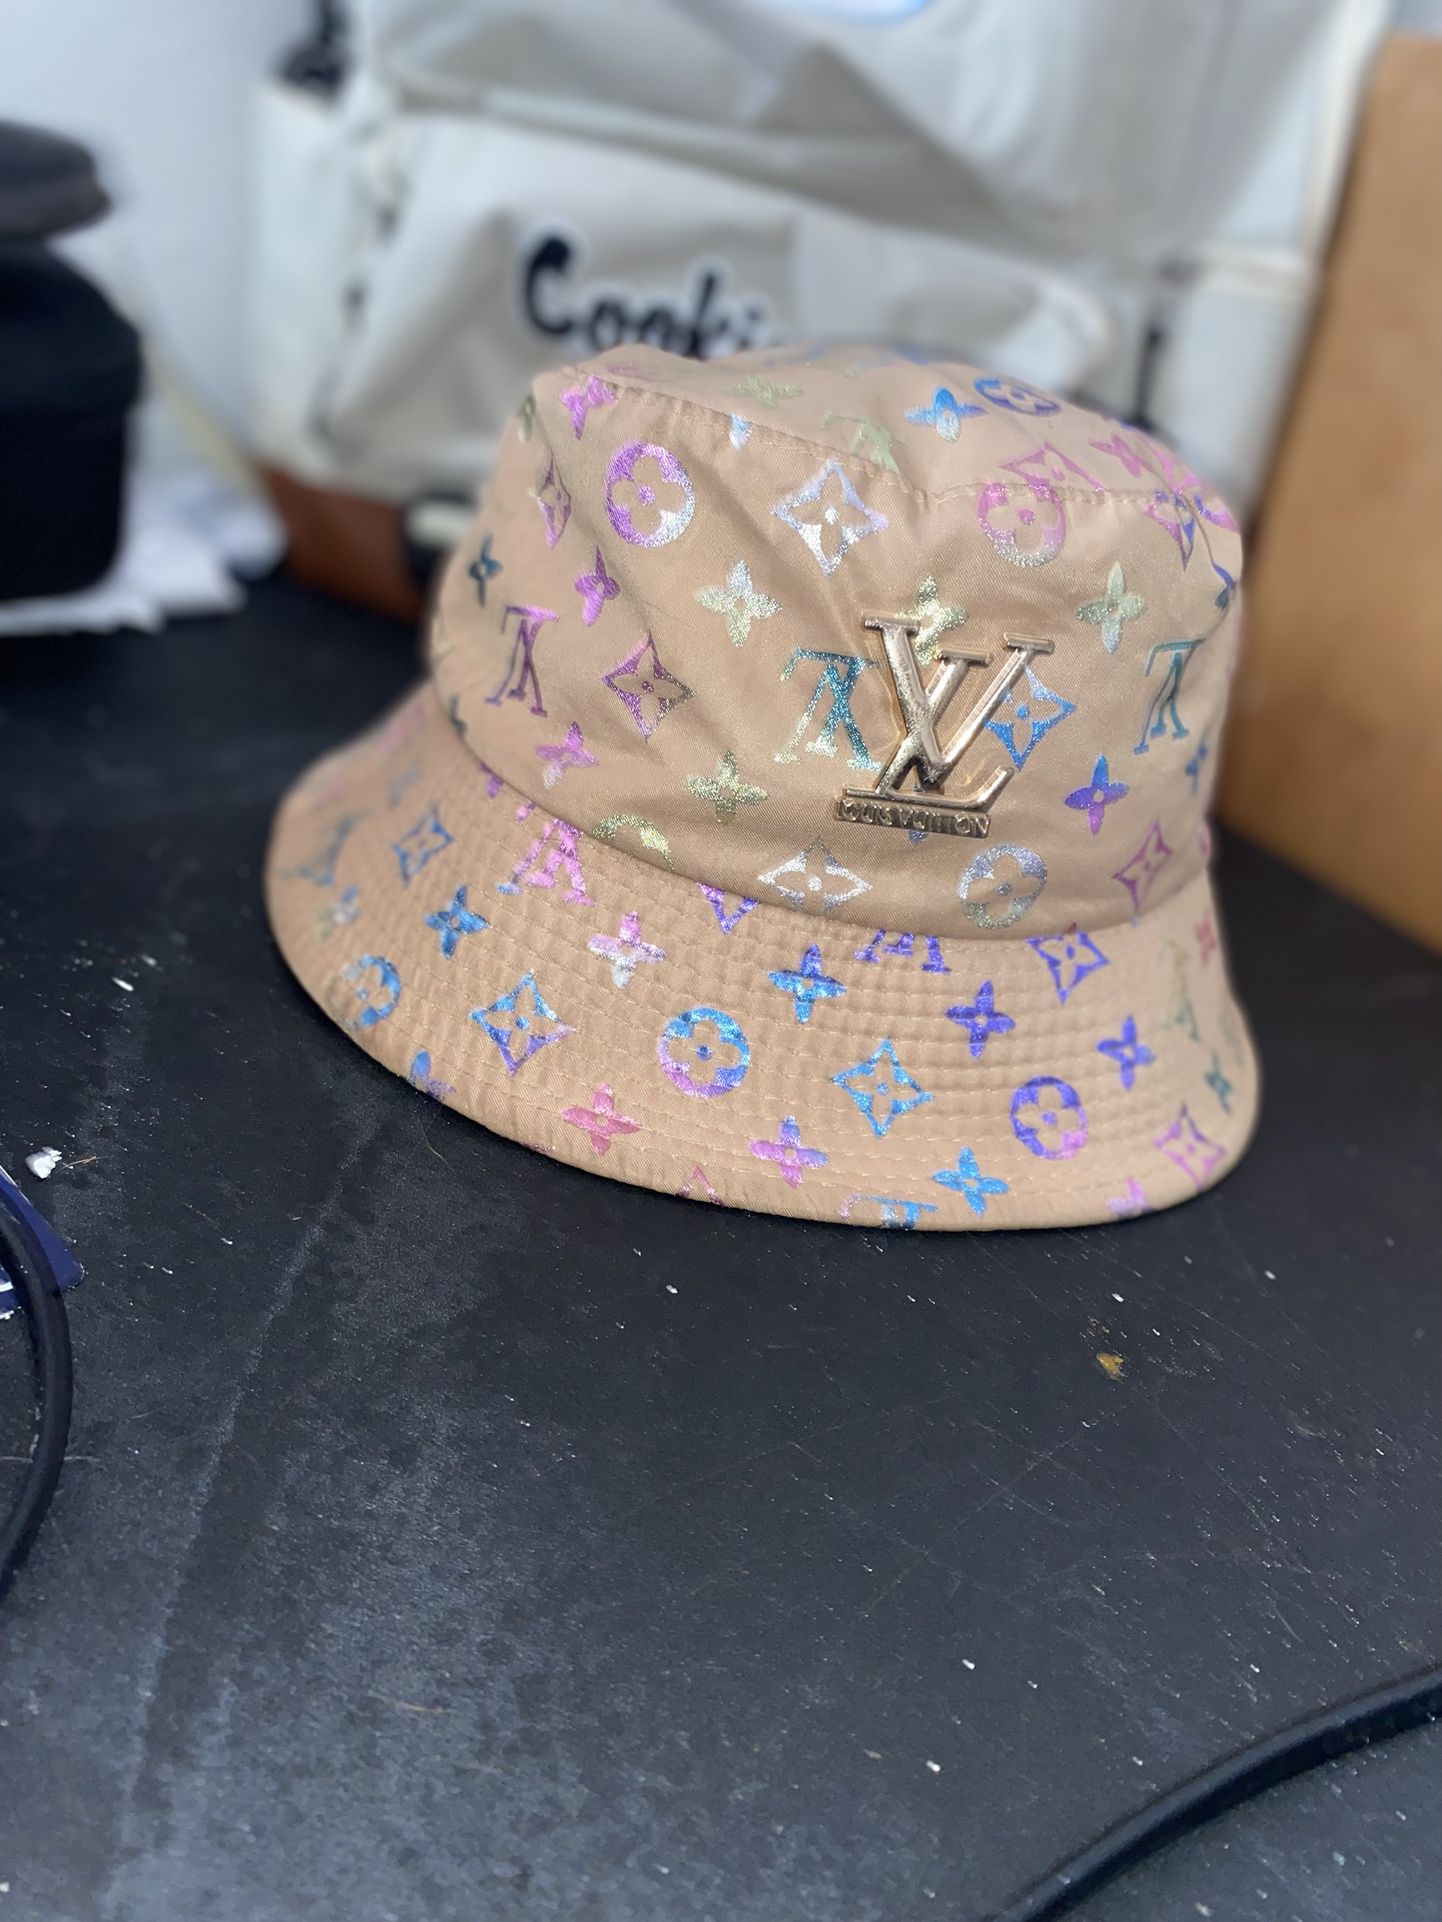 pink louis vuitton bucket hat